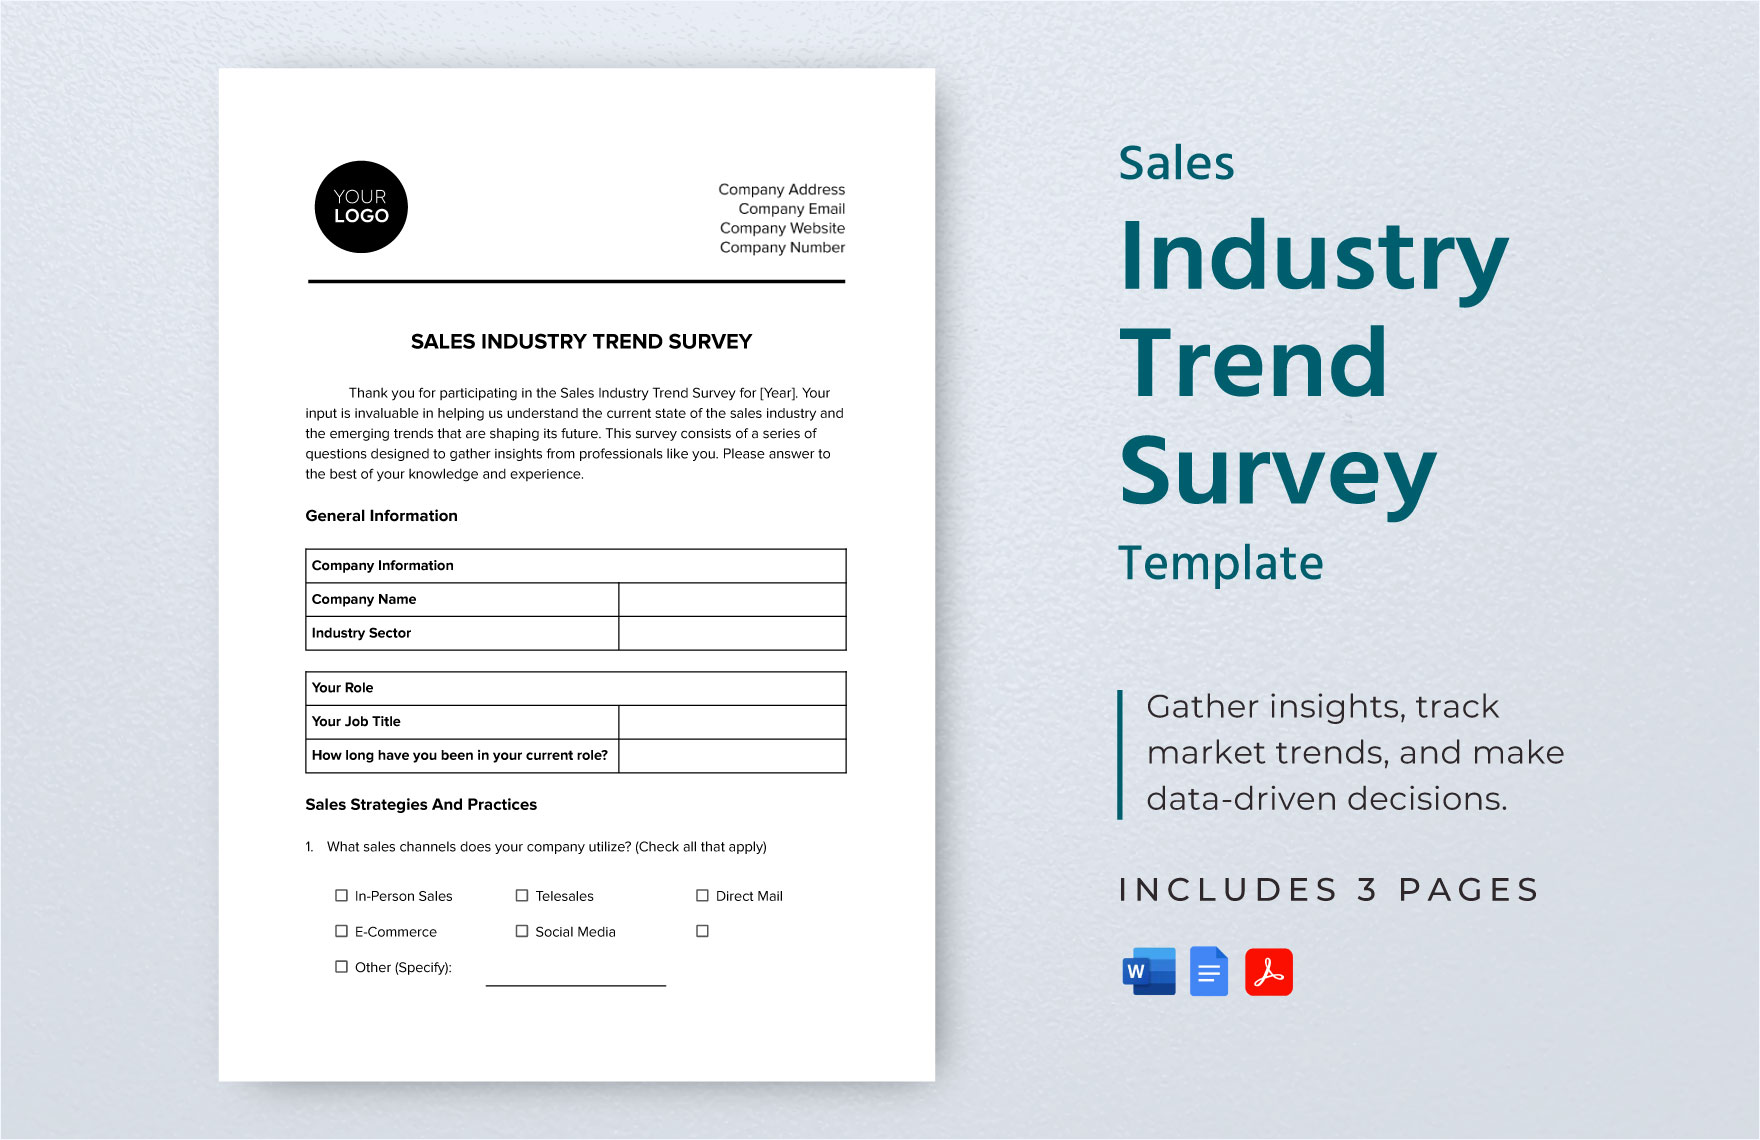 Sales Industry Trend Survey Template in Word, Google Docs, PDF